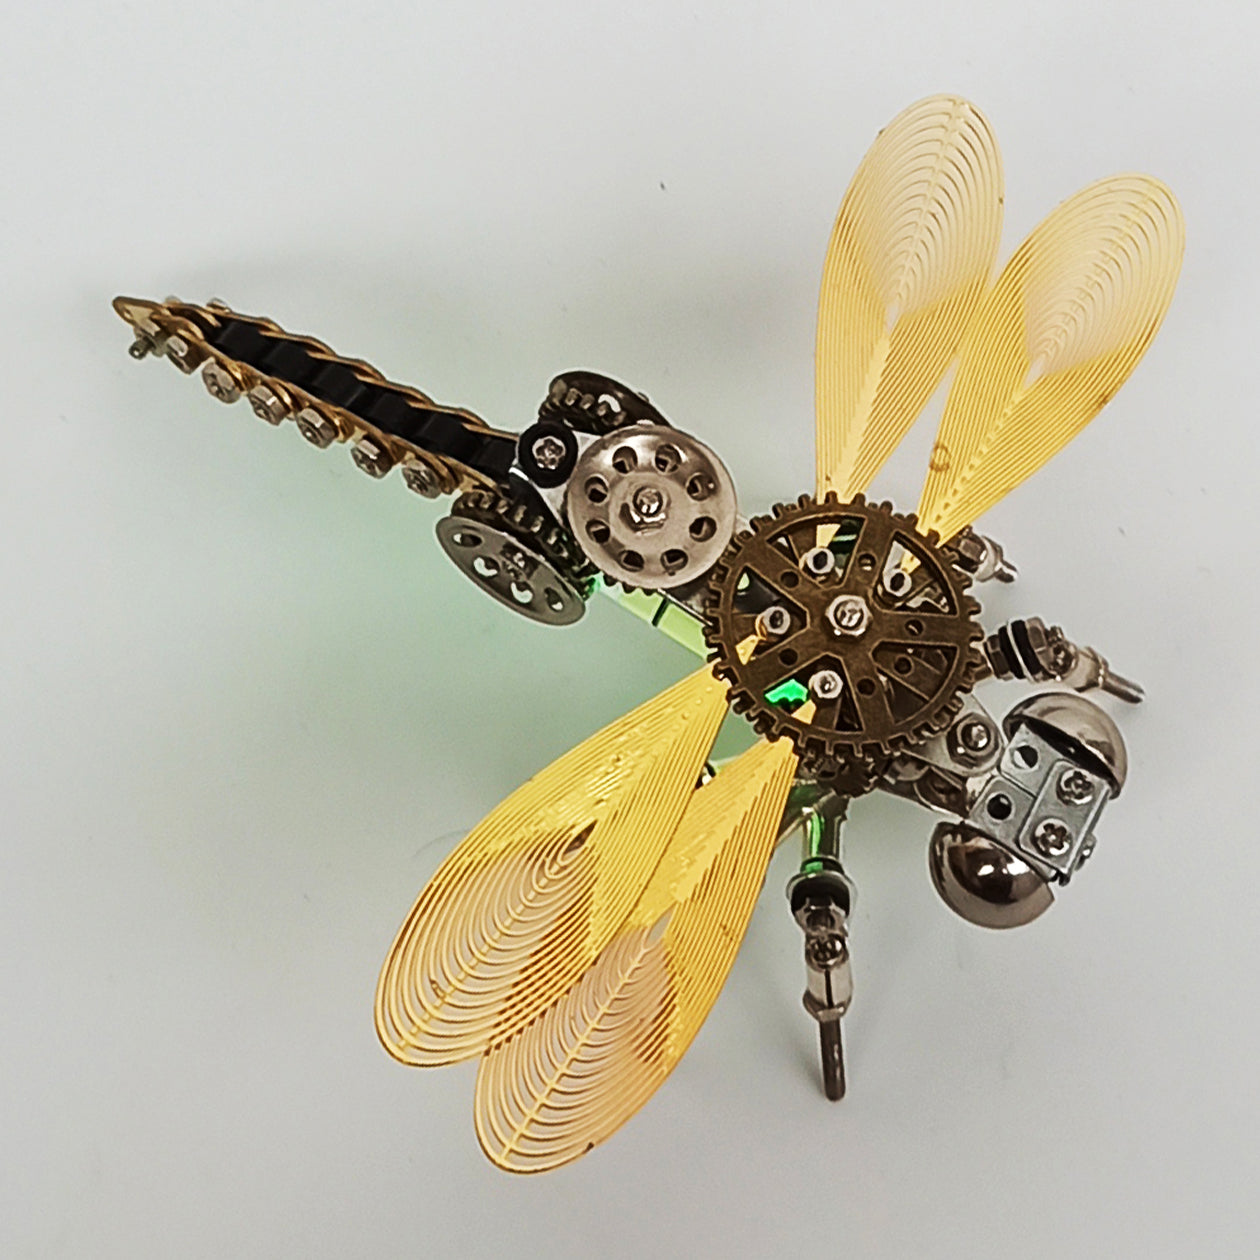 3D Mechanical Dragonfly